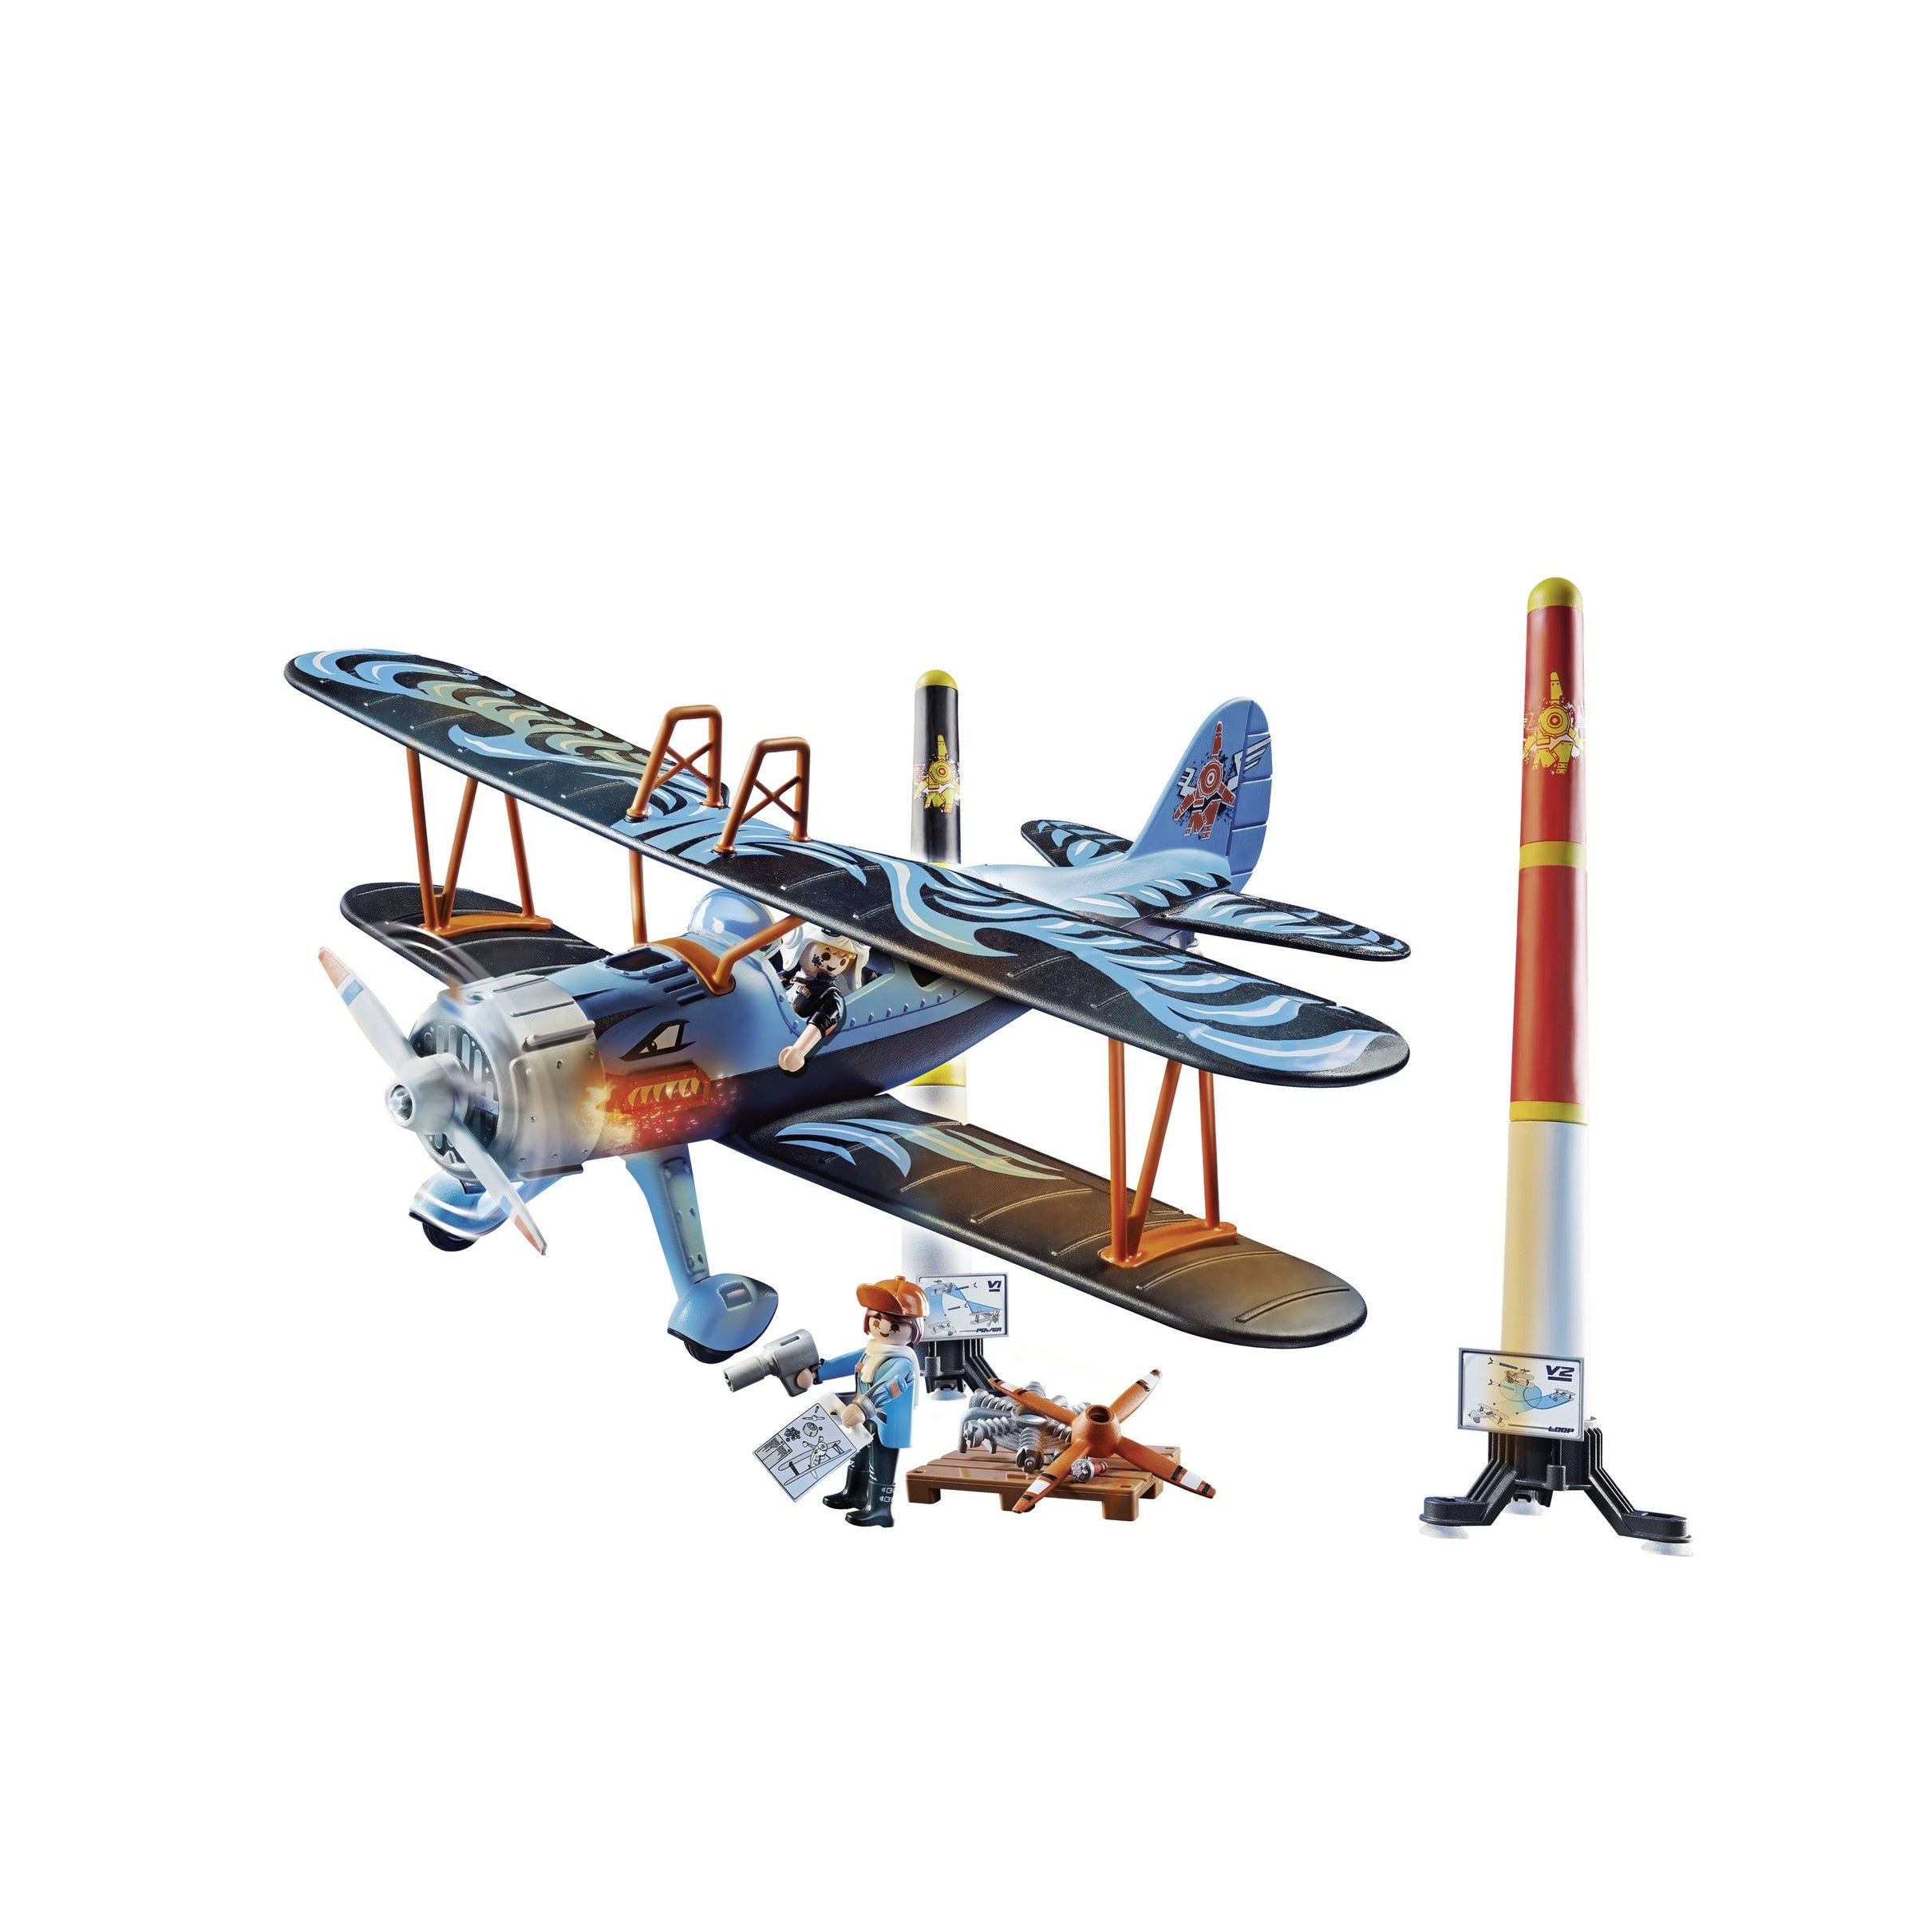 Playmobil-Air Stunt Show - Phoenix Biplane-70831-Legacy Toys